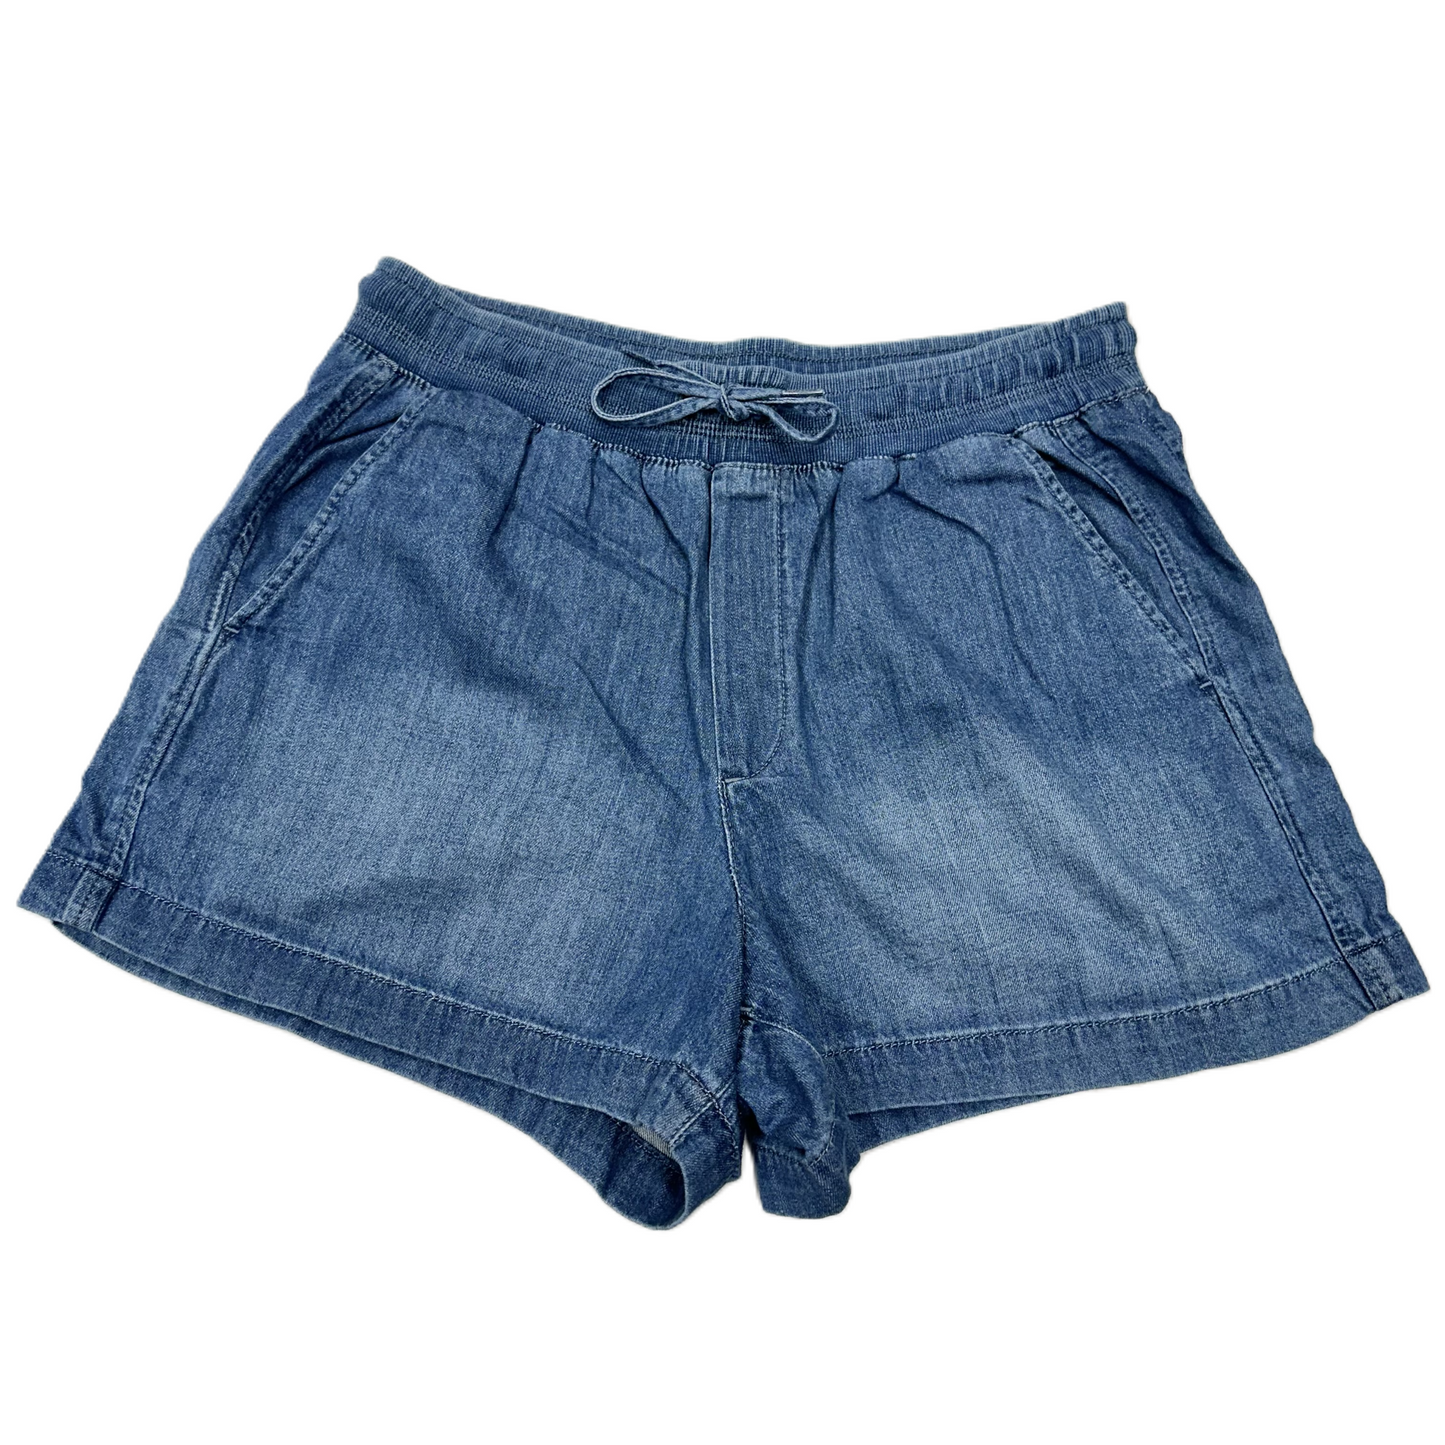 Blue Denim Shorts By Gap, Size: M